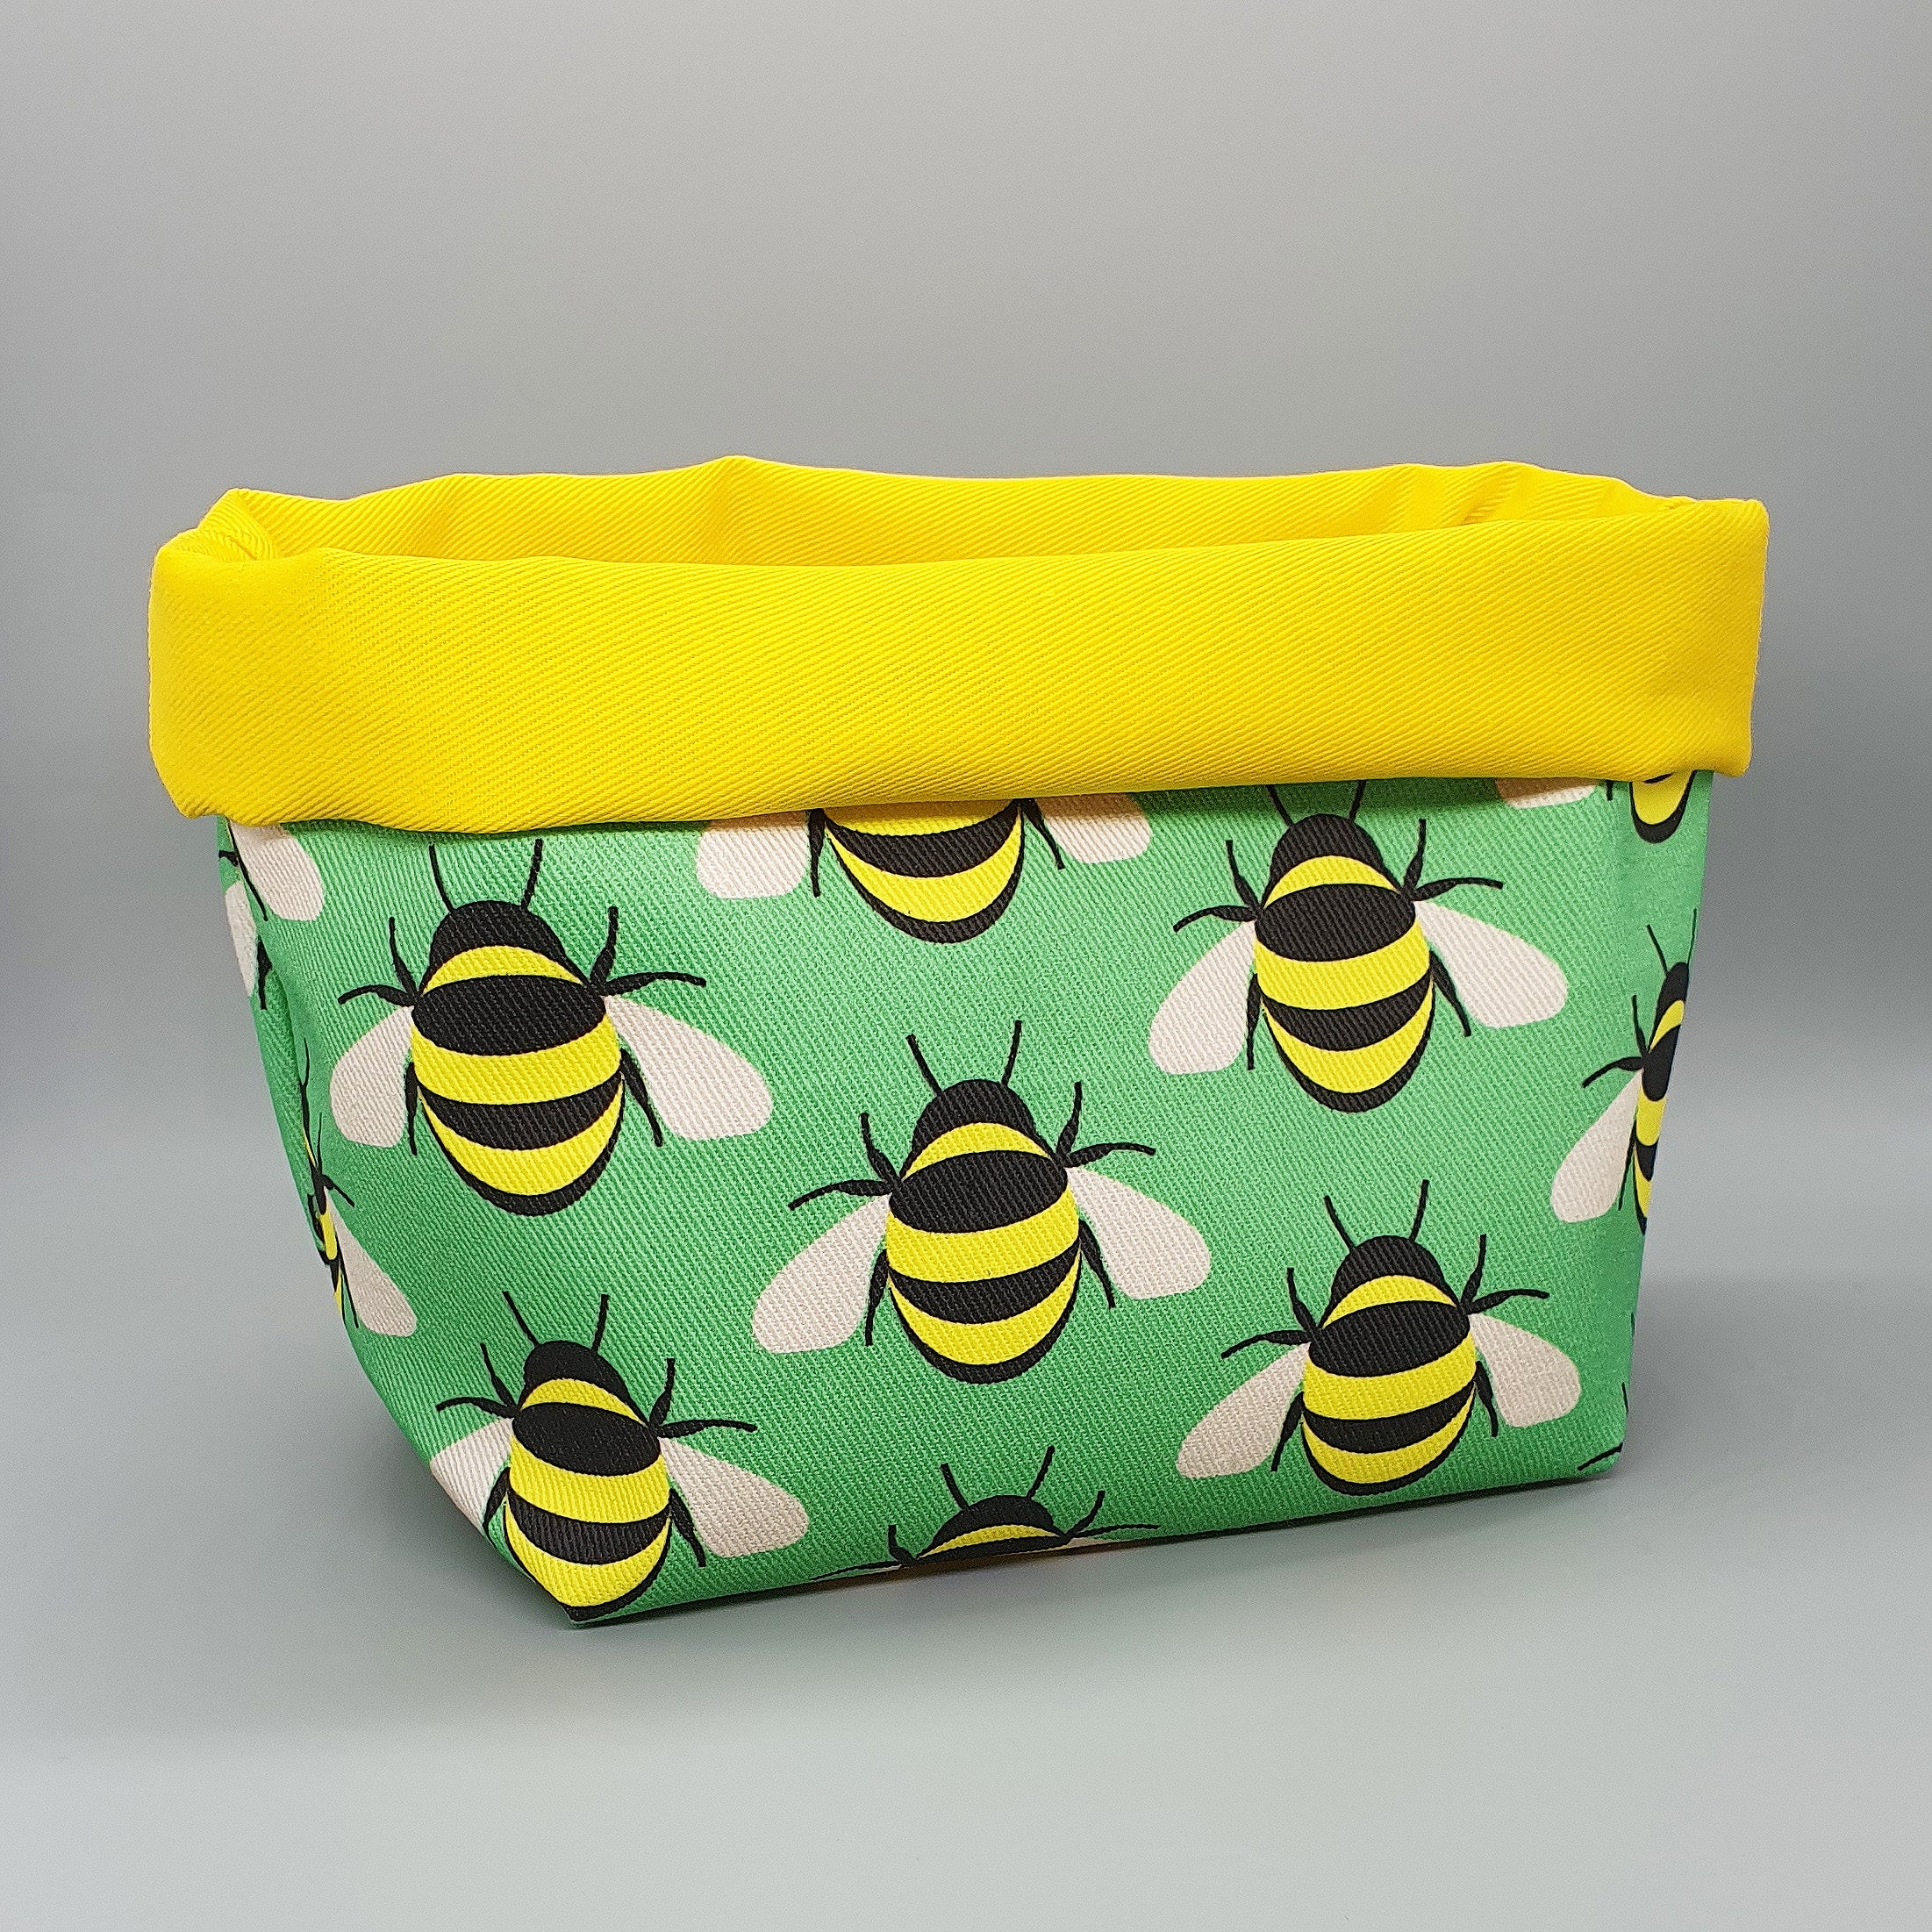 Bee handmade fabric storage basket with yellow lining